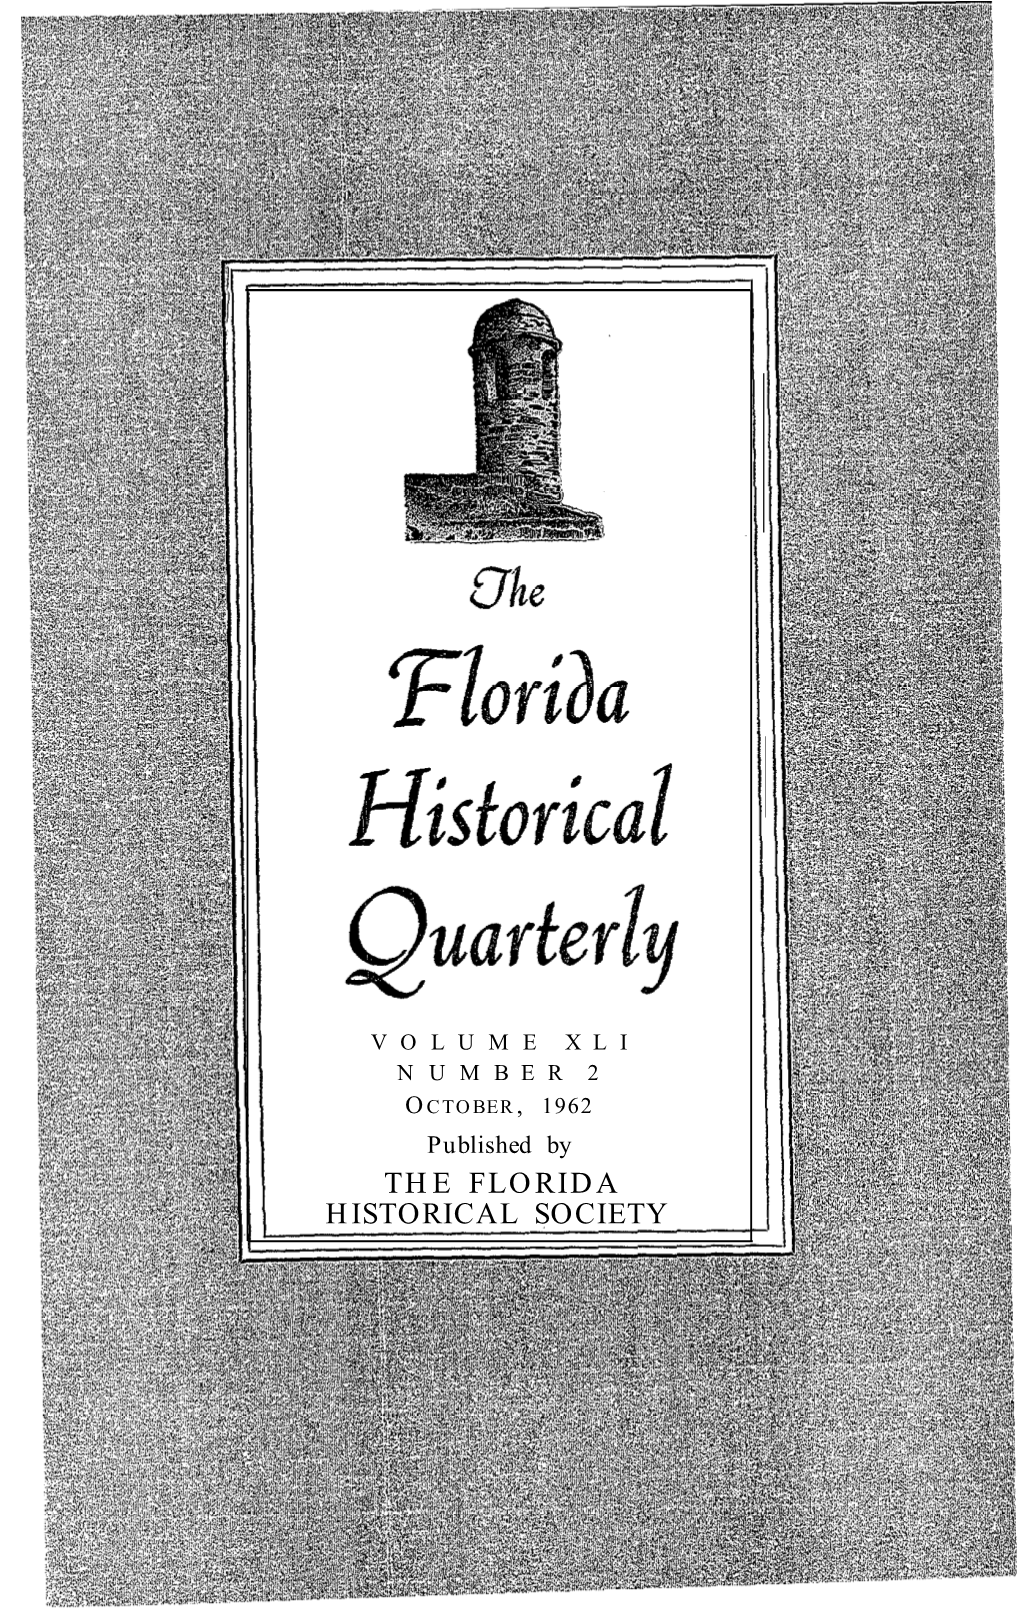 The Florida Historical Quarterly Volume Xli October, 1962 Number 2